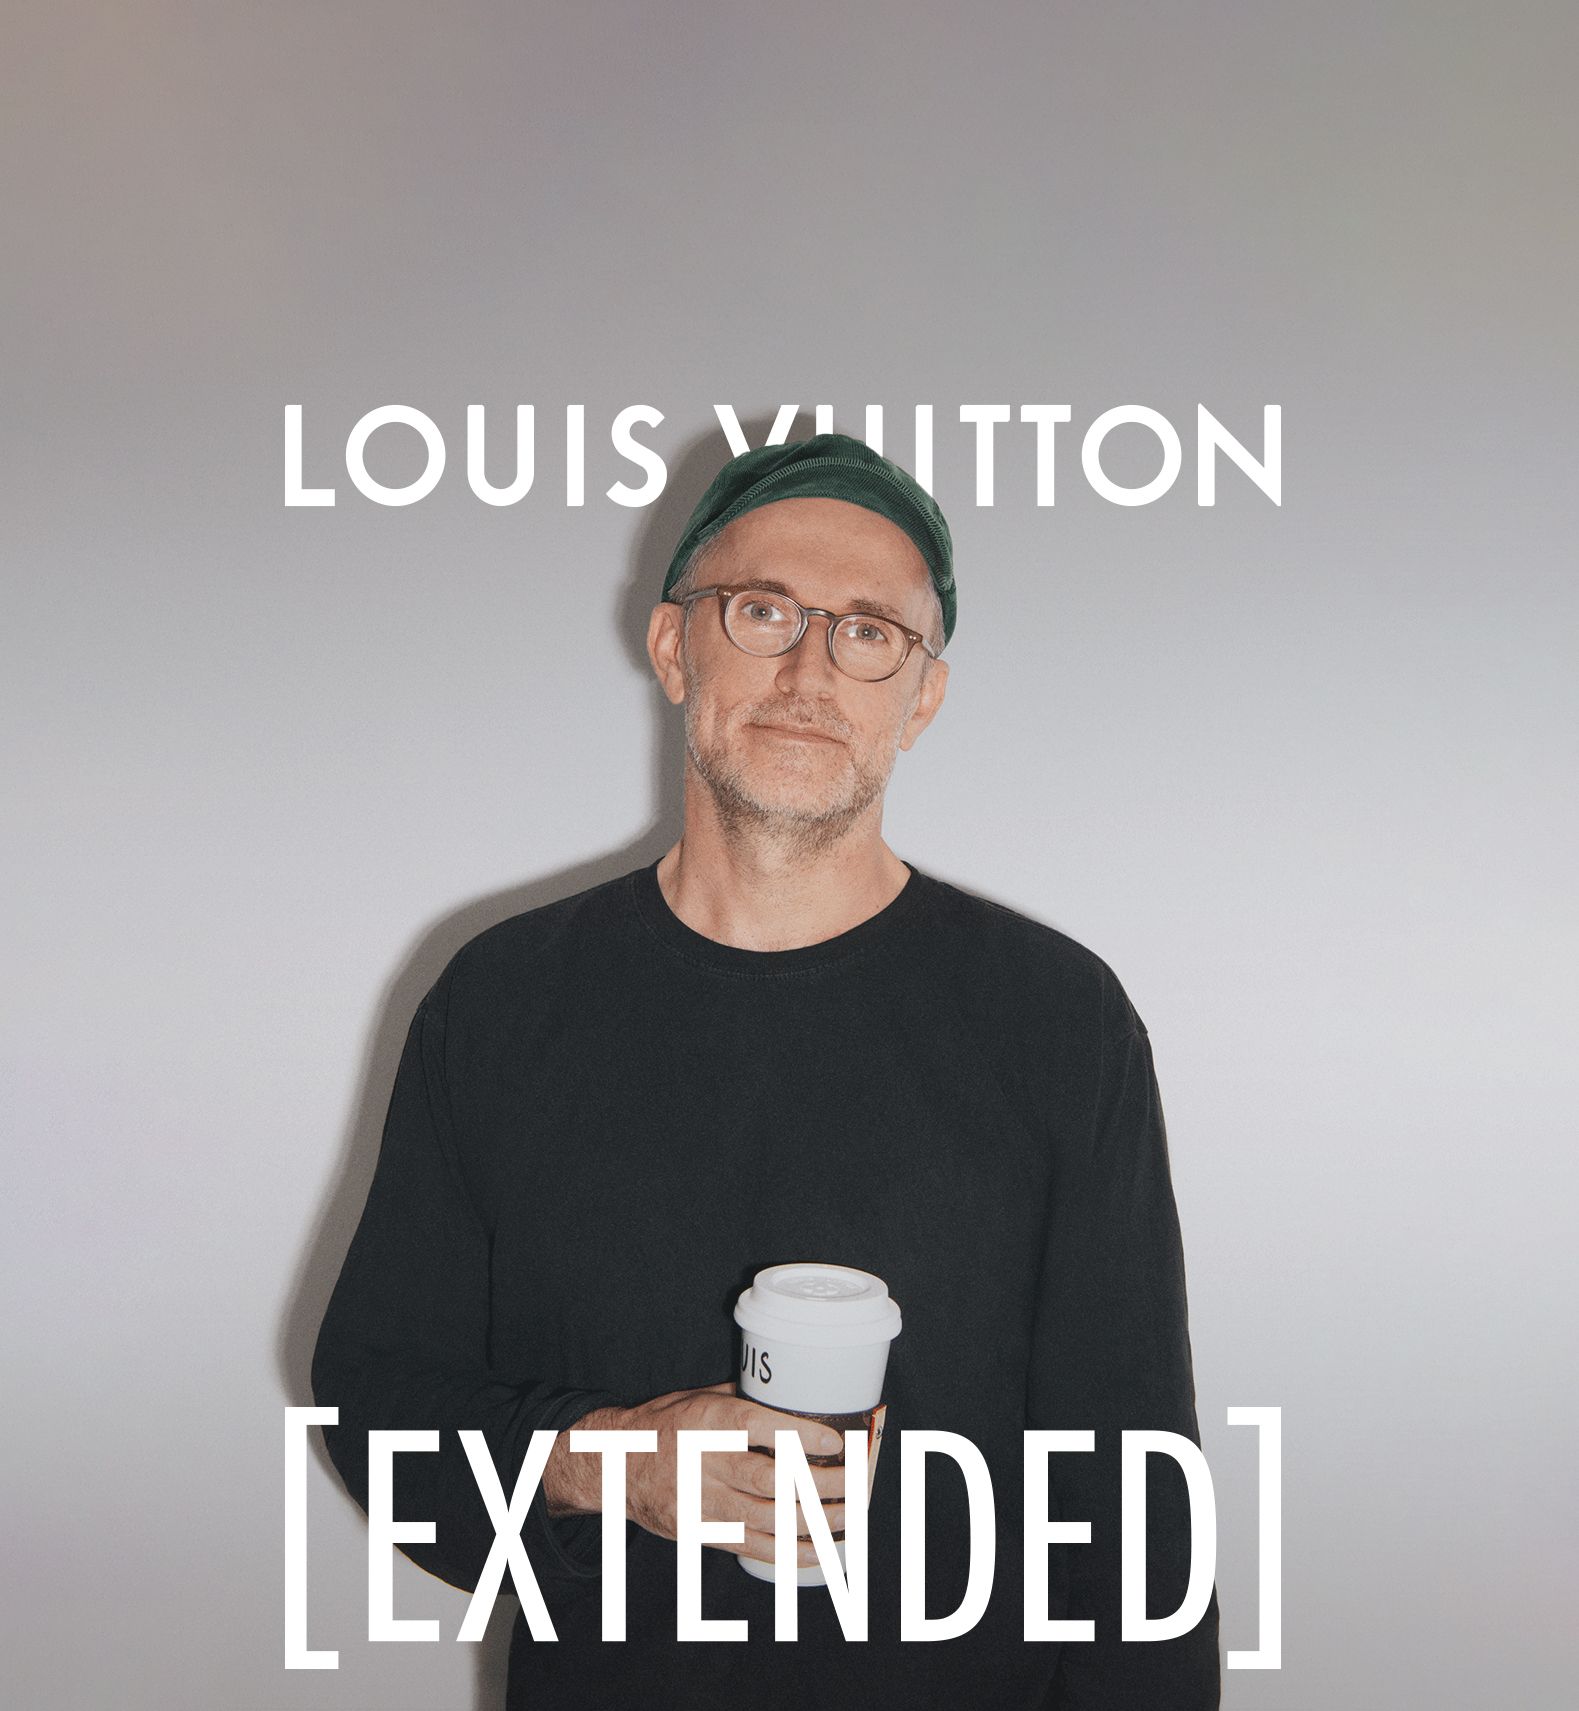 Louis Vuitton - Savoir-Faire on Display. Discover Louis